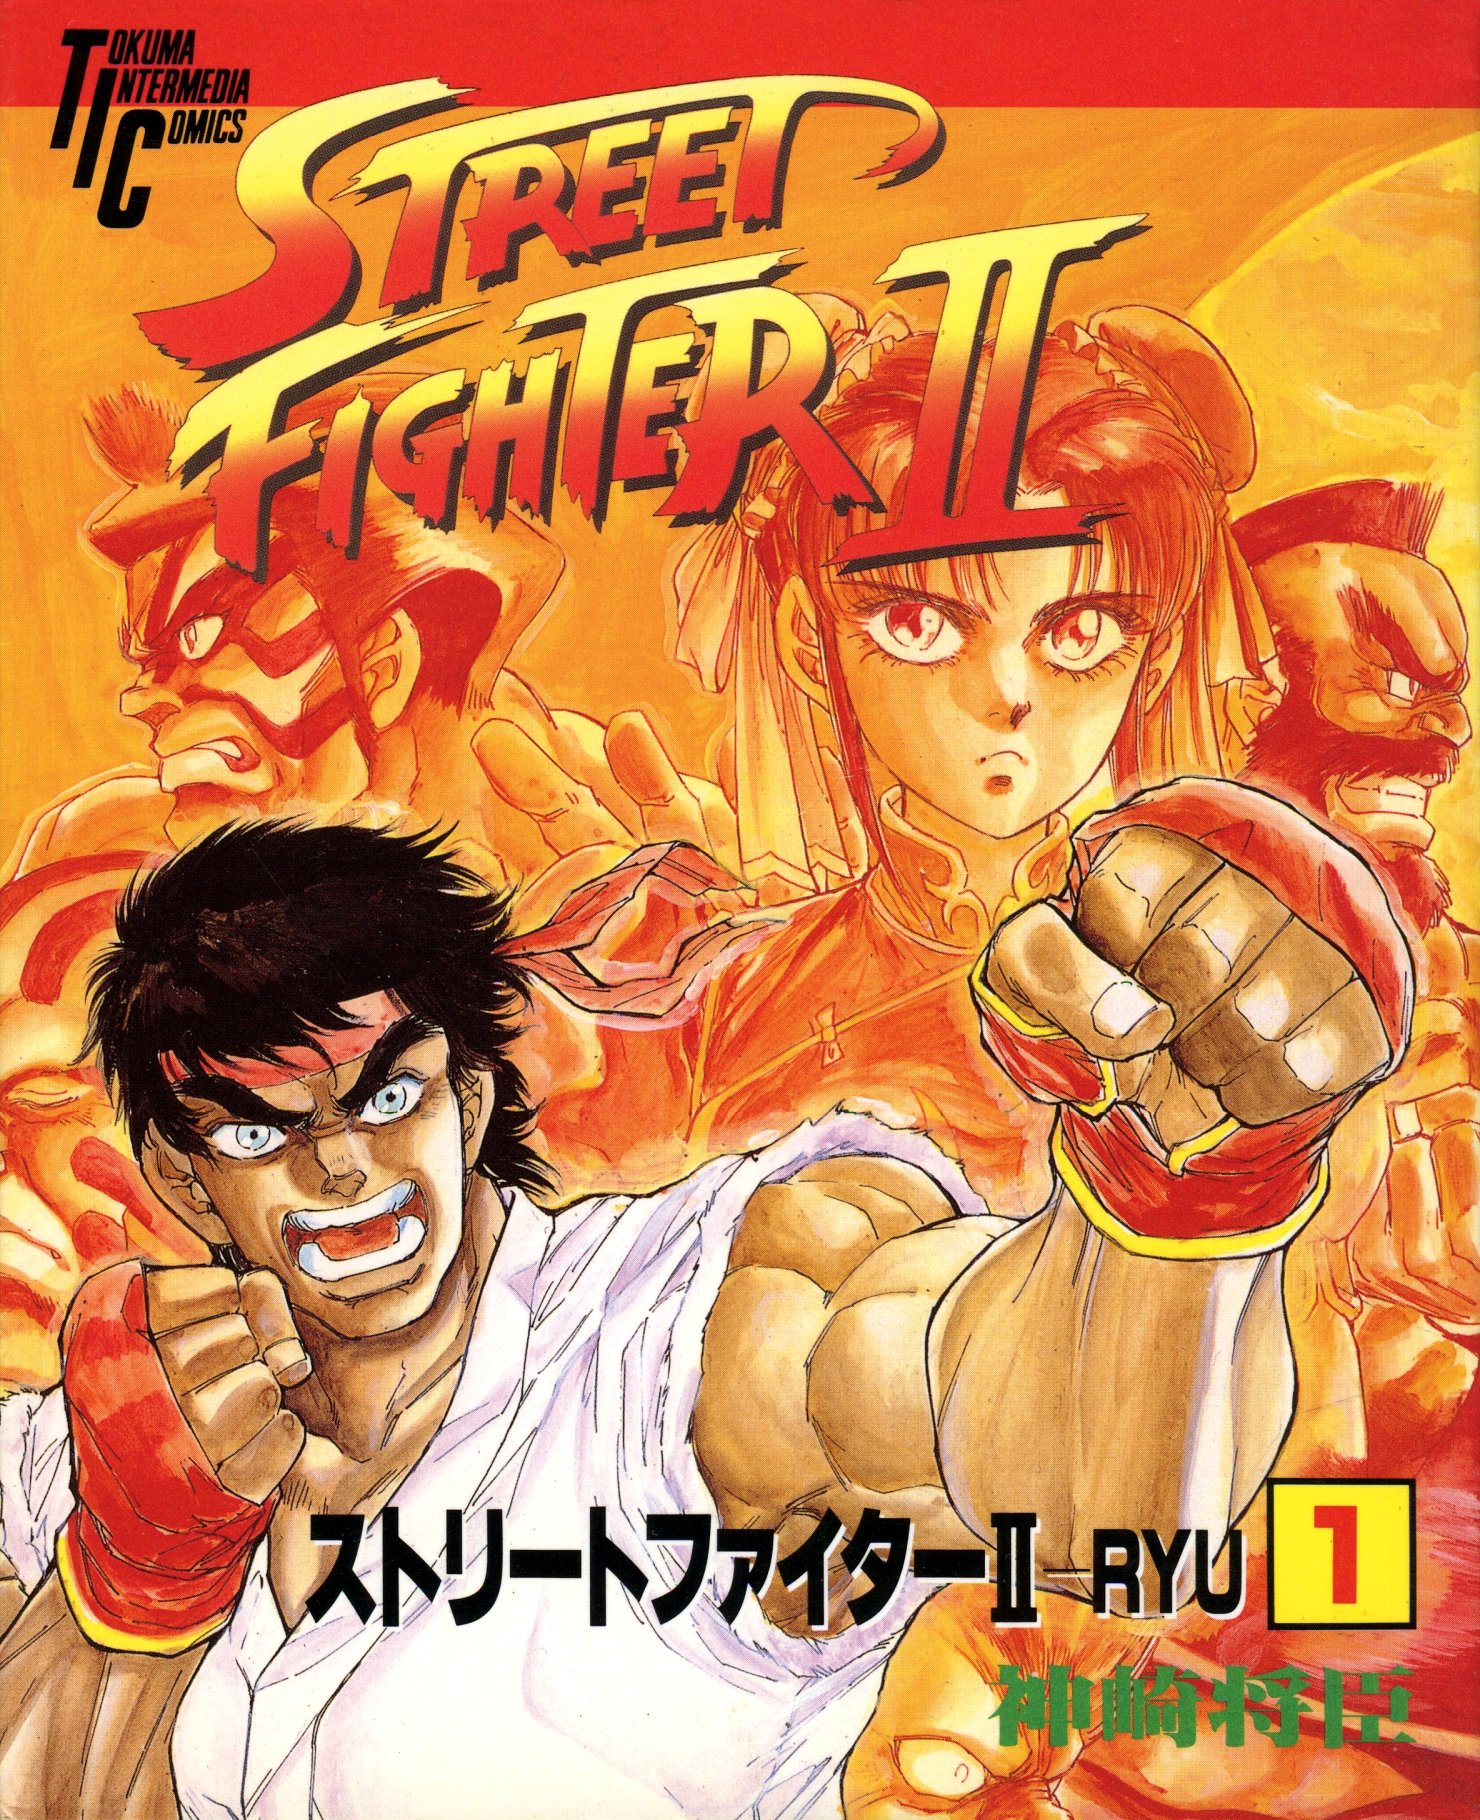 Remake of Street Fighter 1